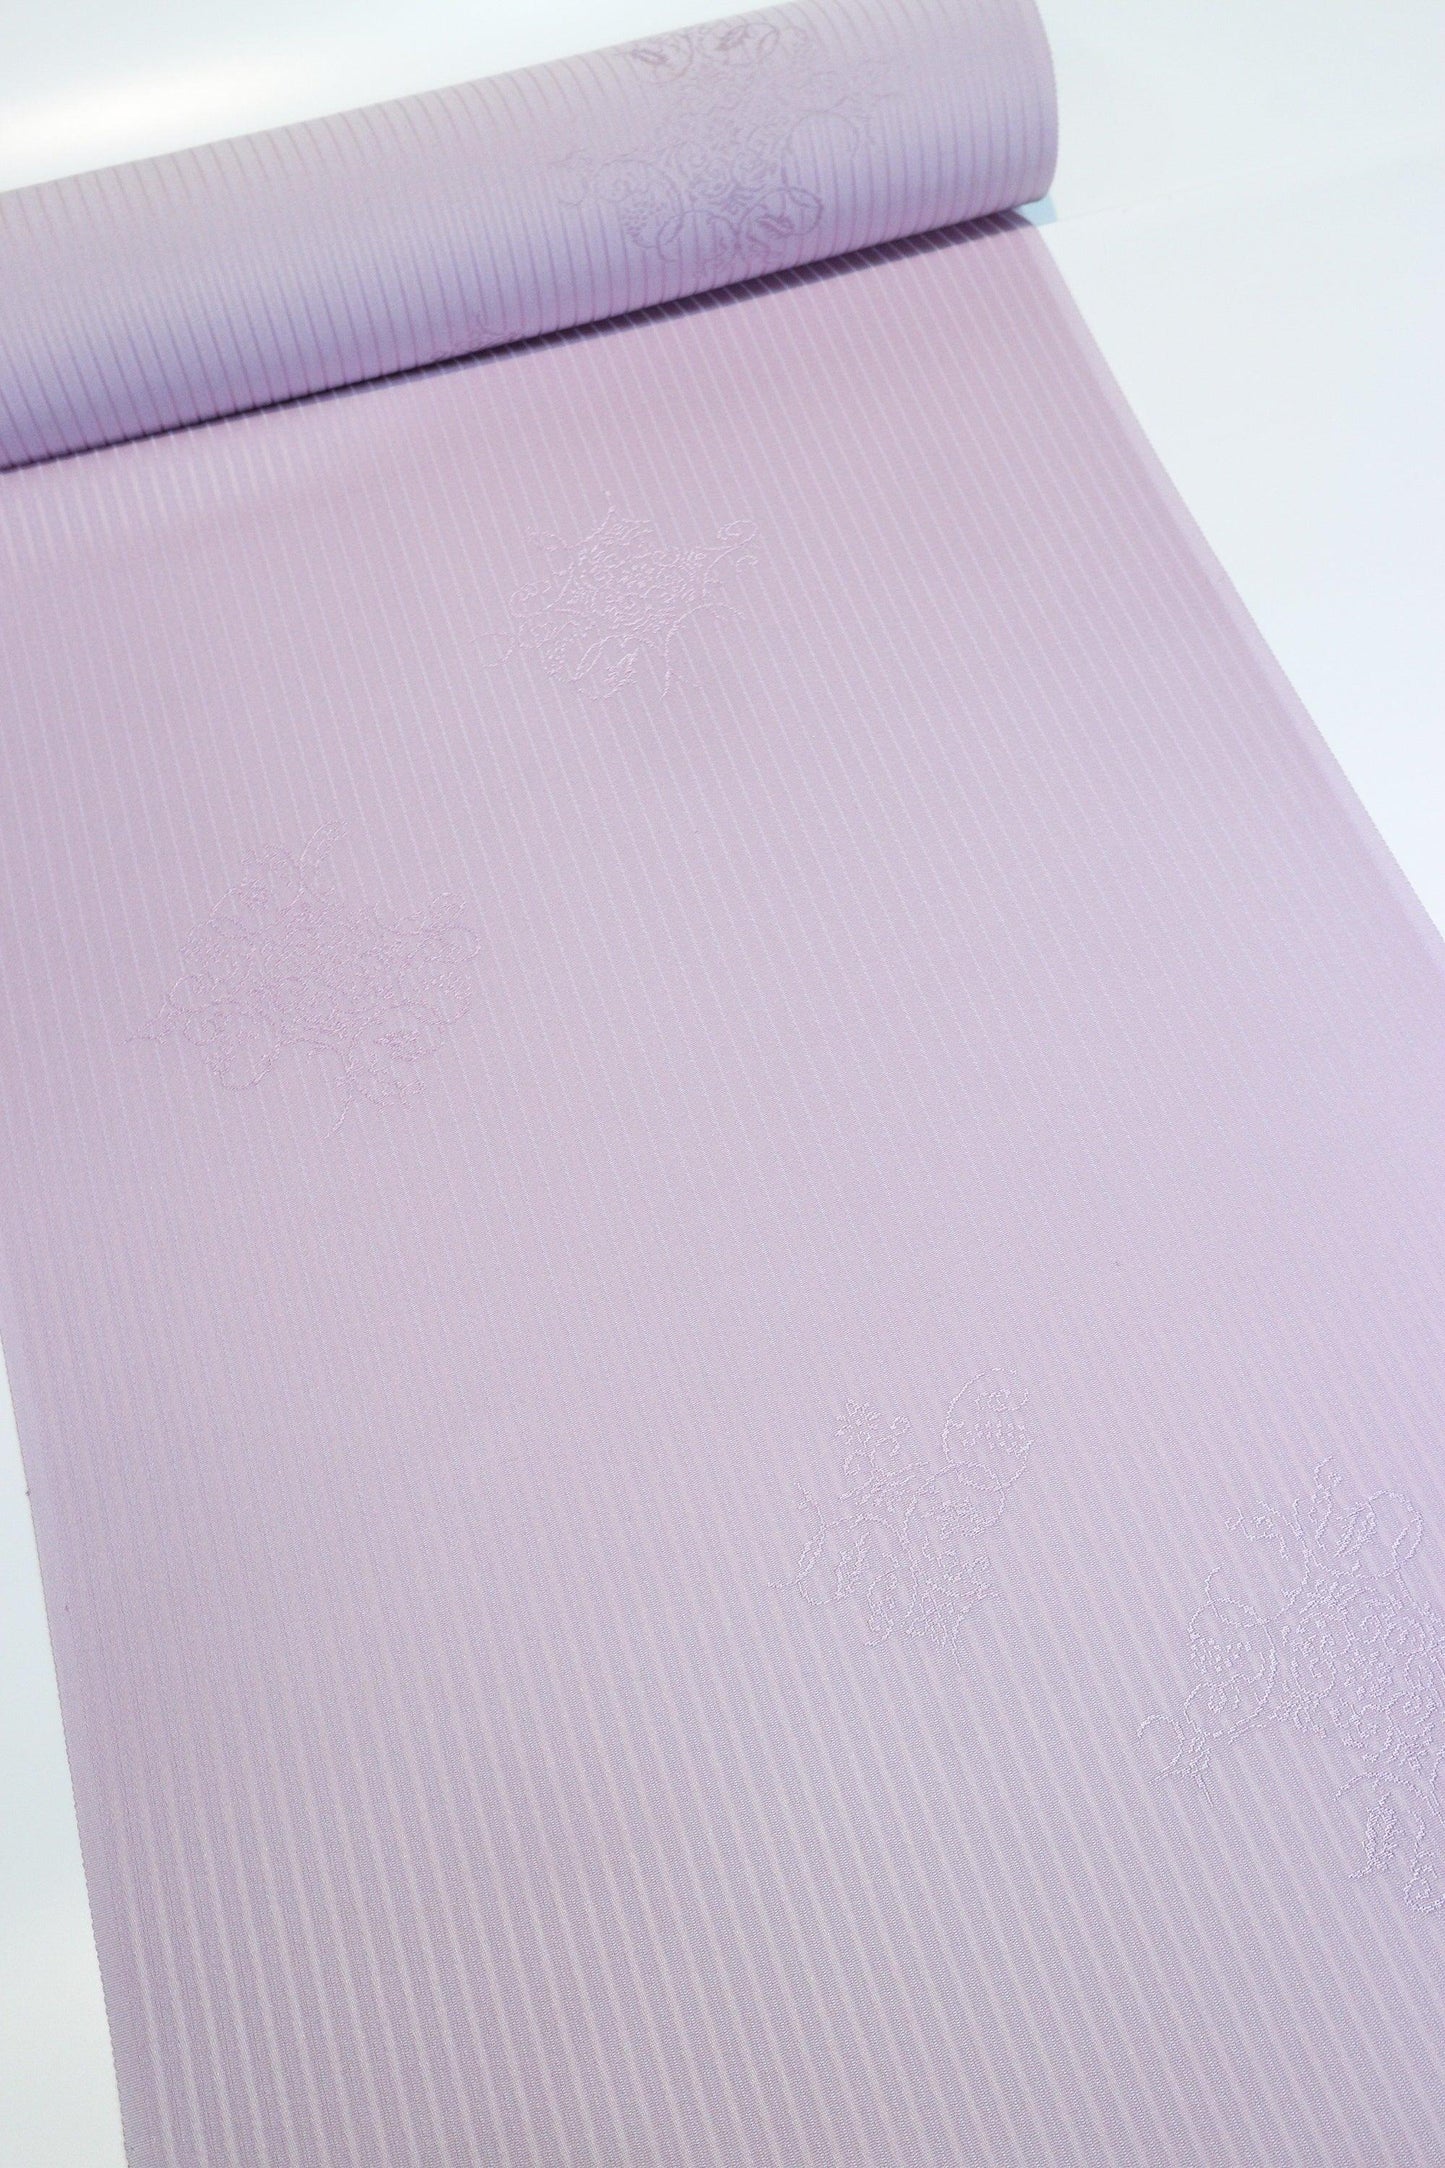 【hibicolle】正絹 小紋「流水花」 紫苑色 紋意匠【ヒビコレ】 - きものKUREHA